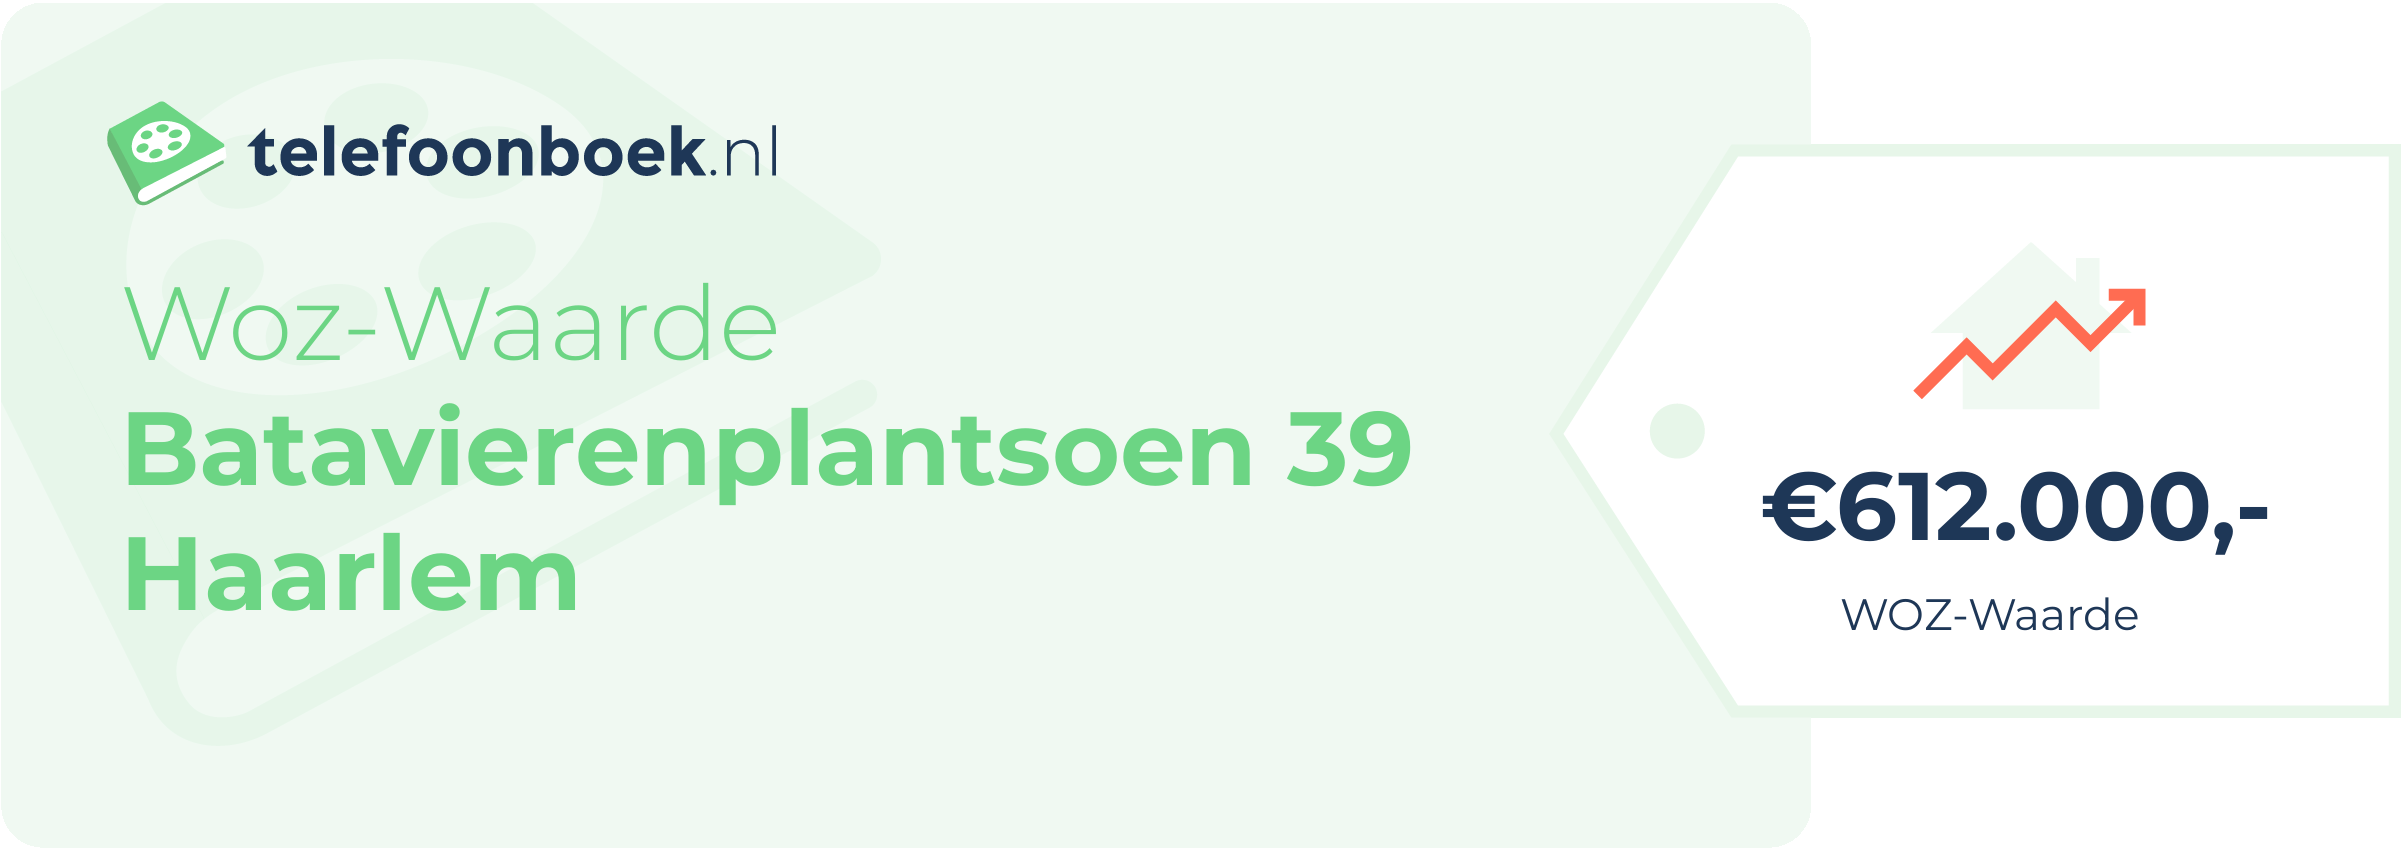 WOZ-waarde Batavierenplantsoen 39 Haarlem